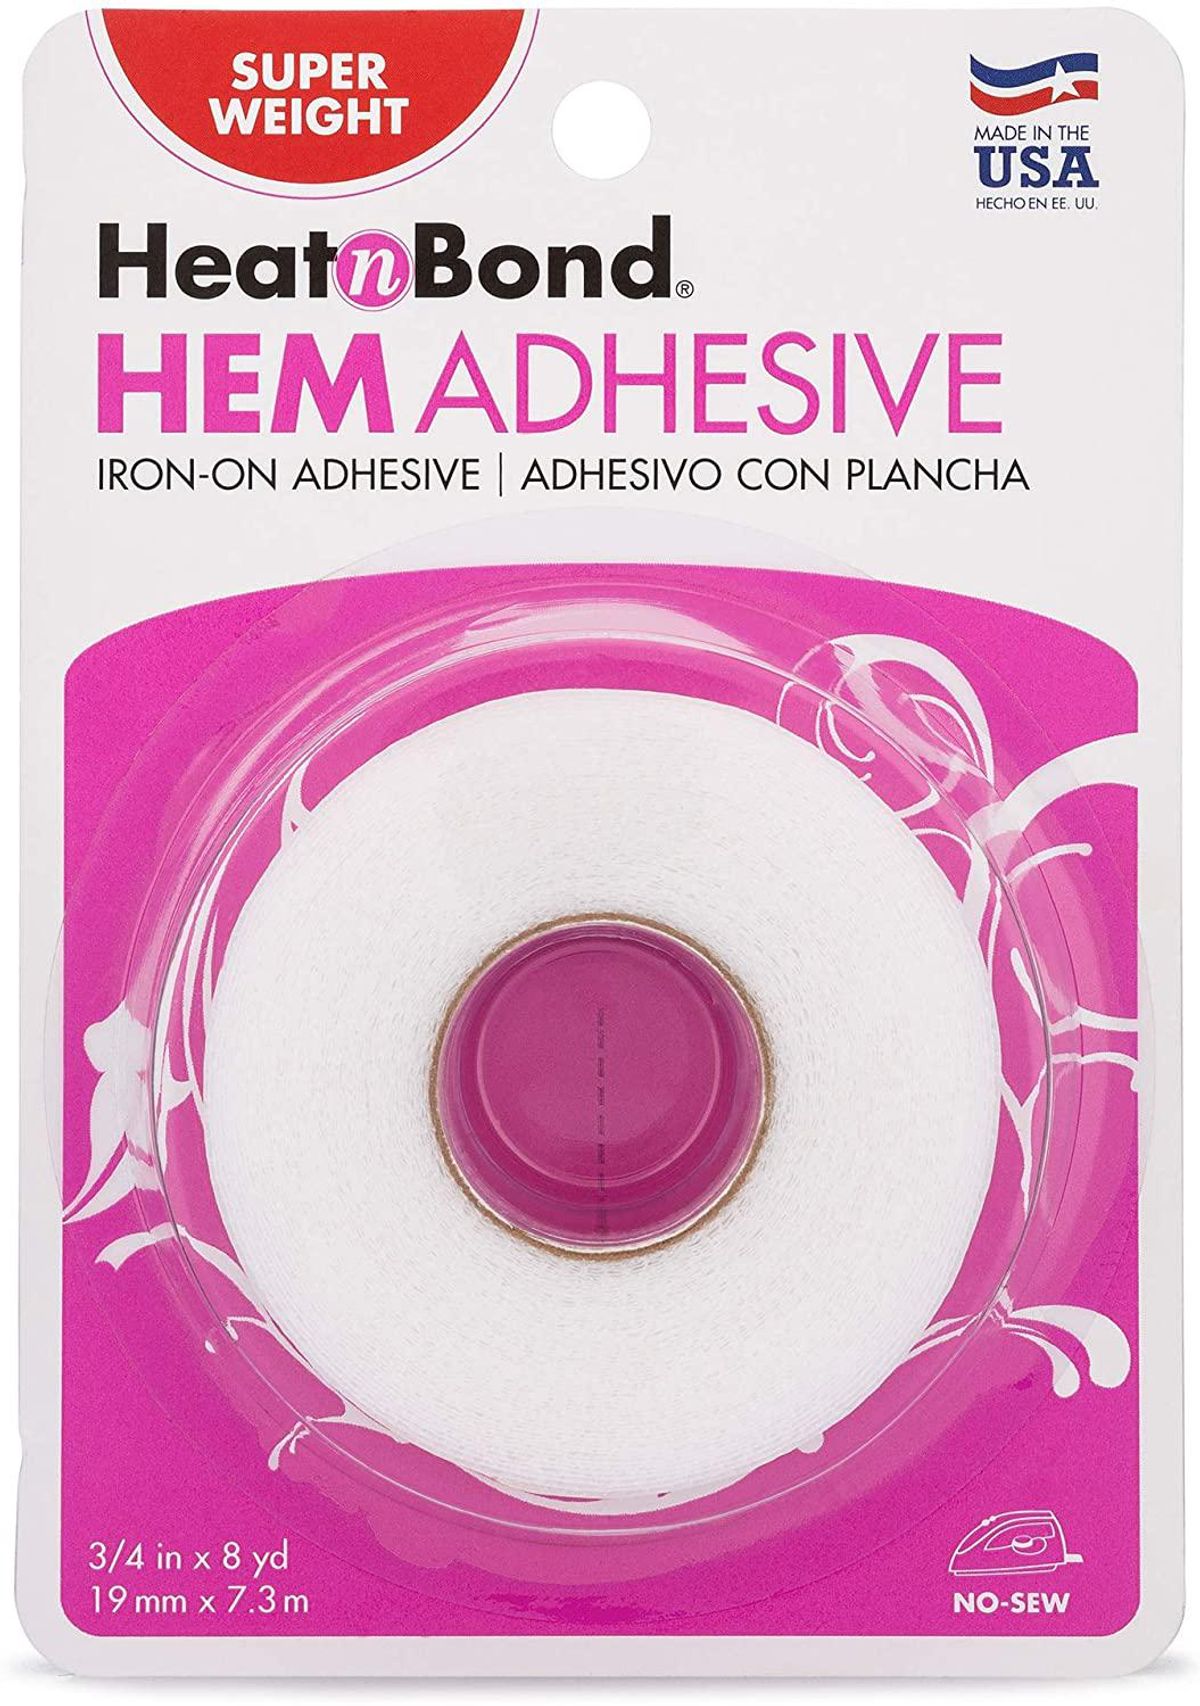 Hem Iron-on Adhesive